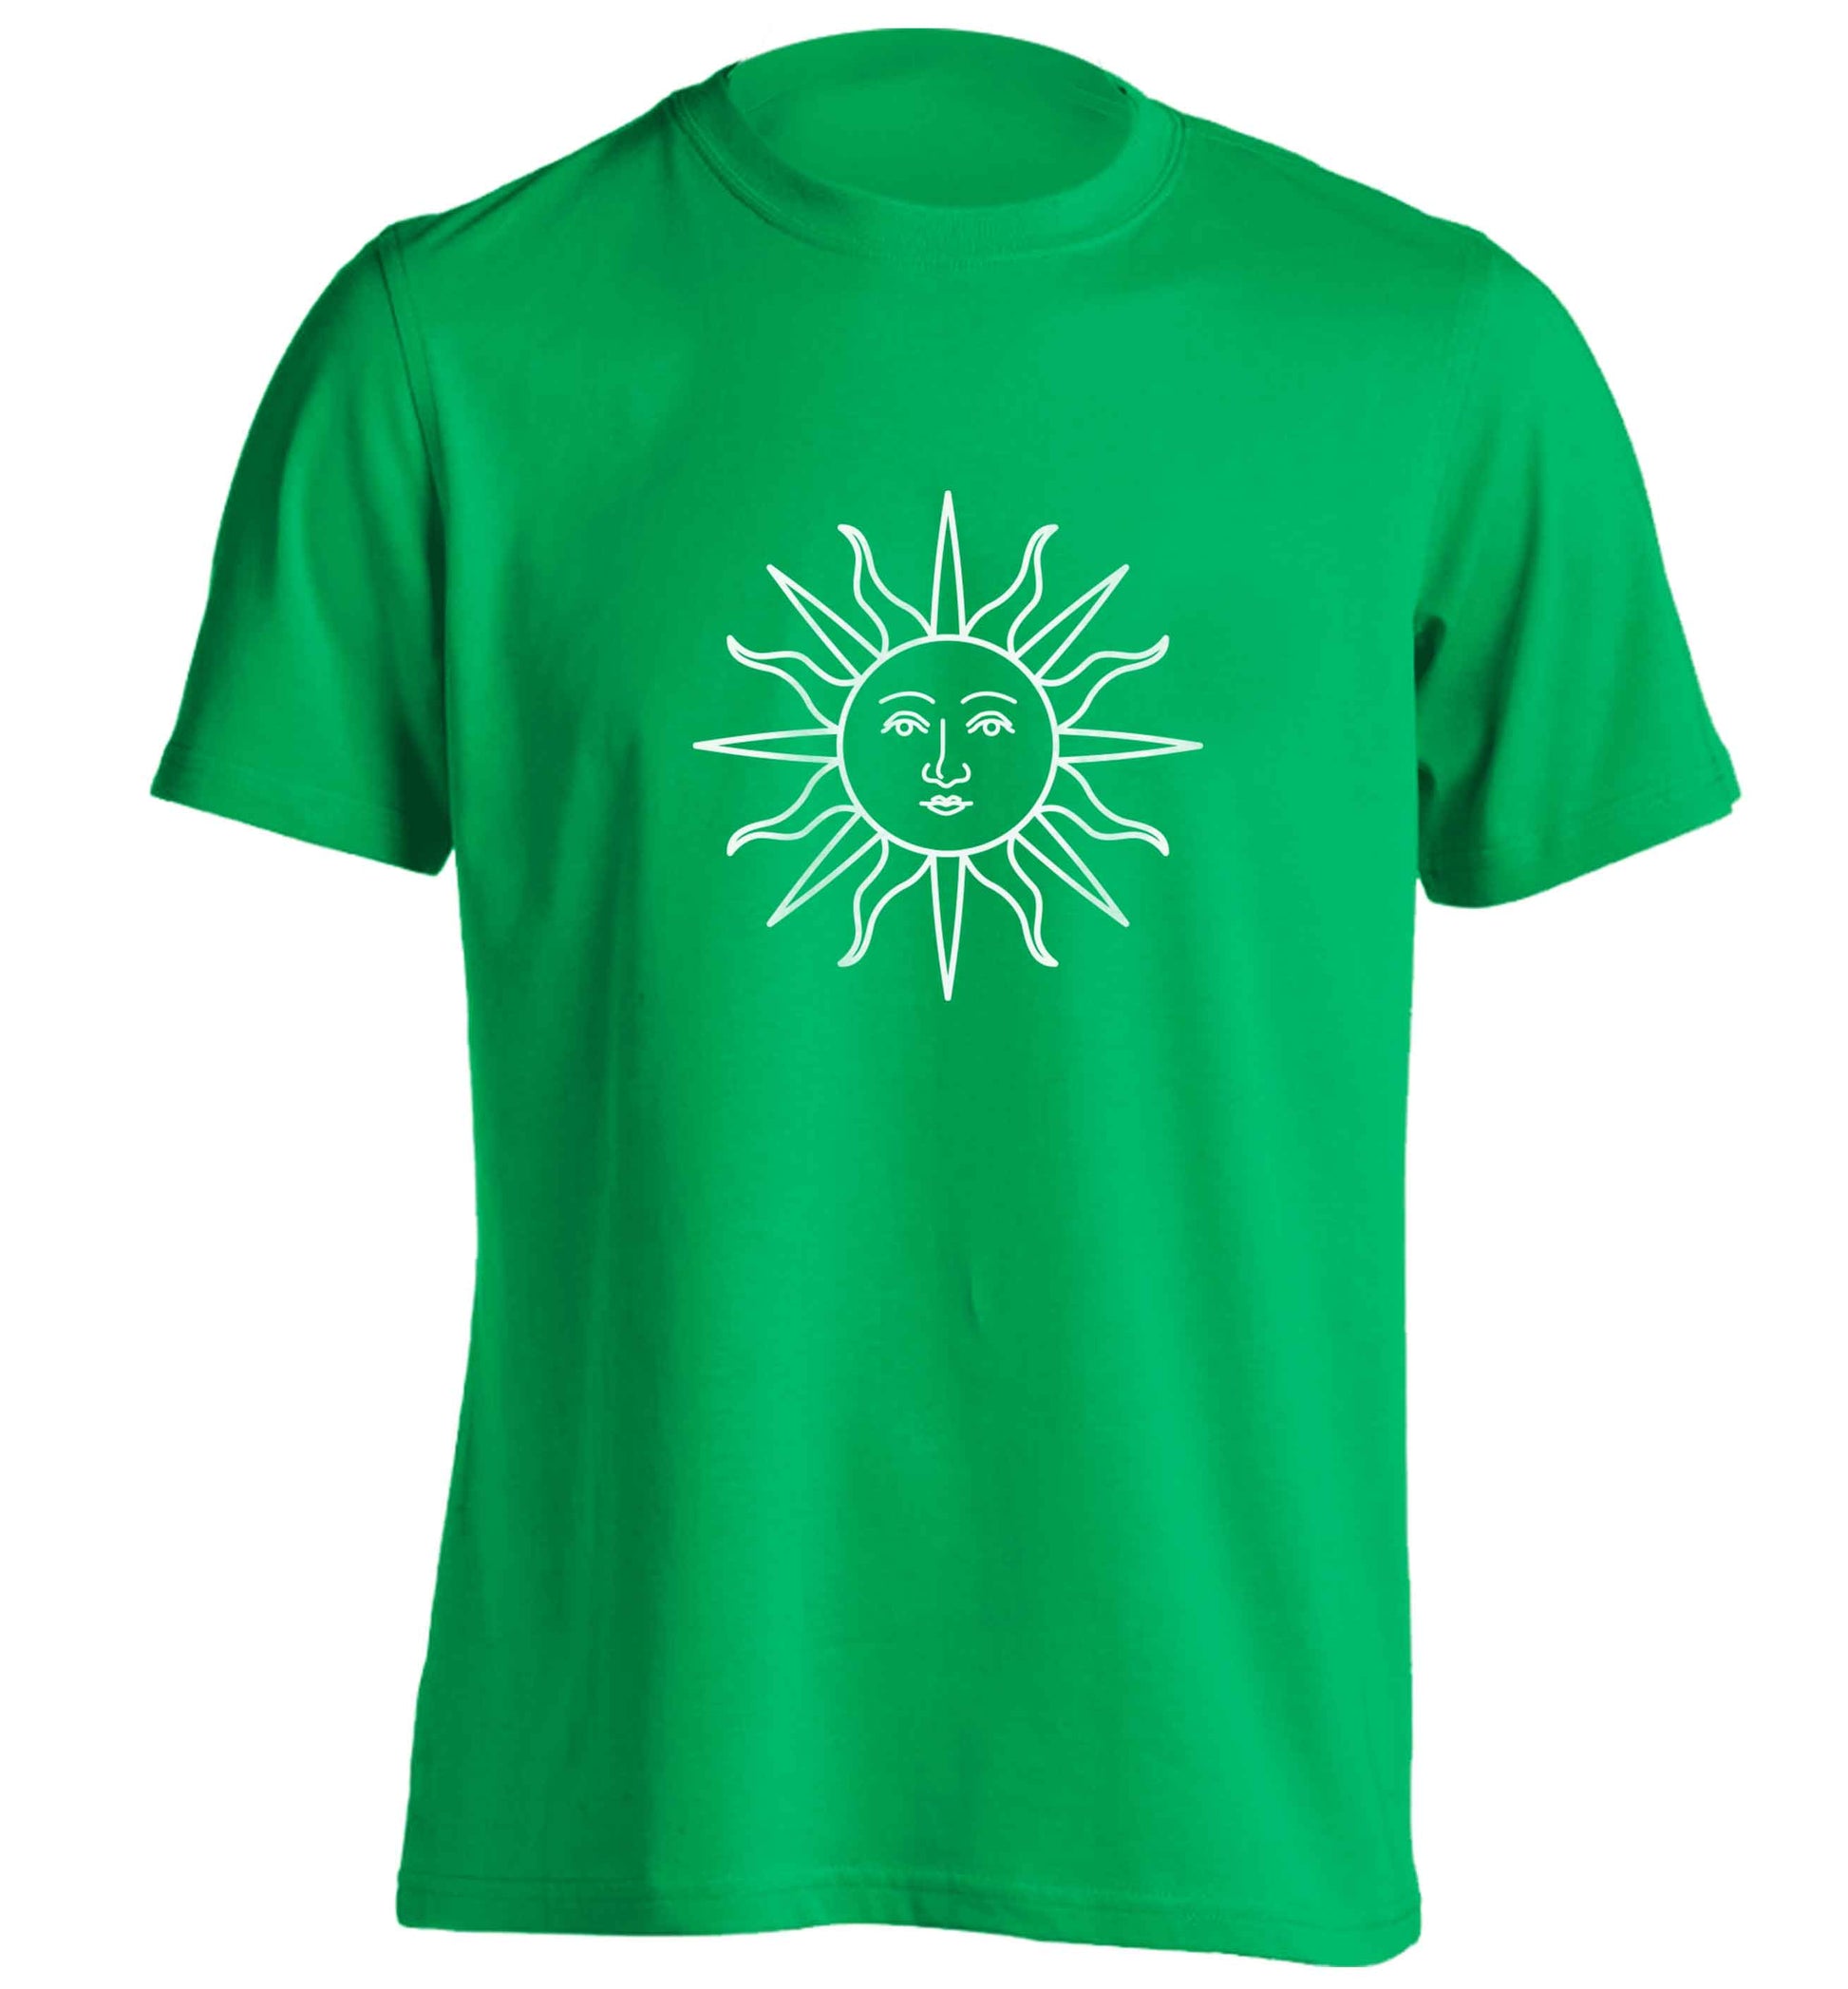 Sun face illustration adults unisex green Tshirt 2XL